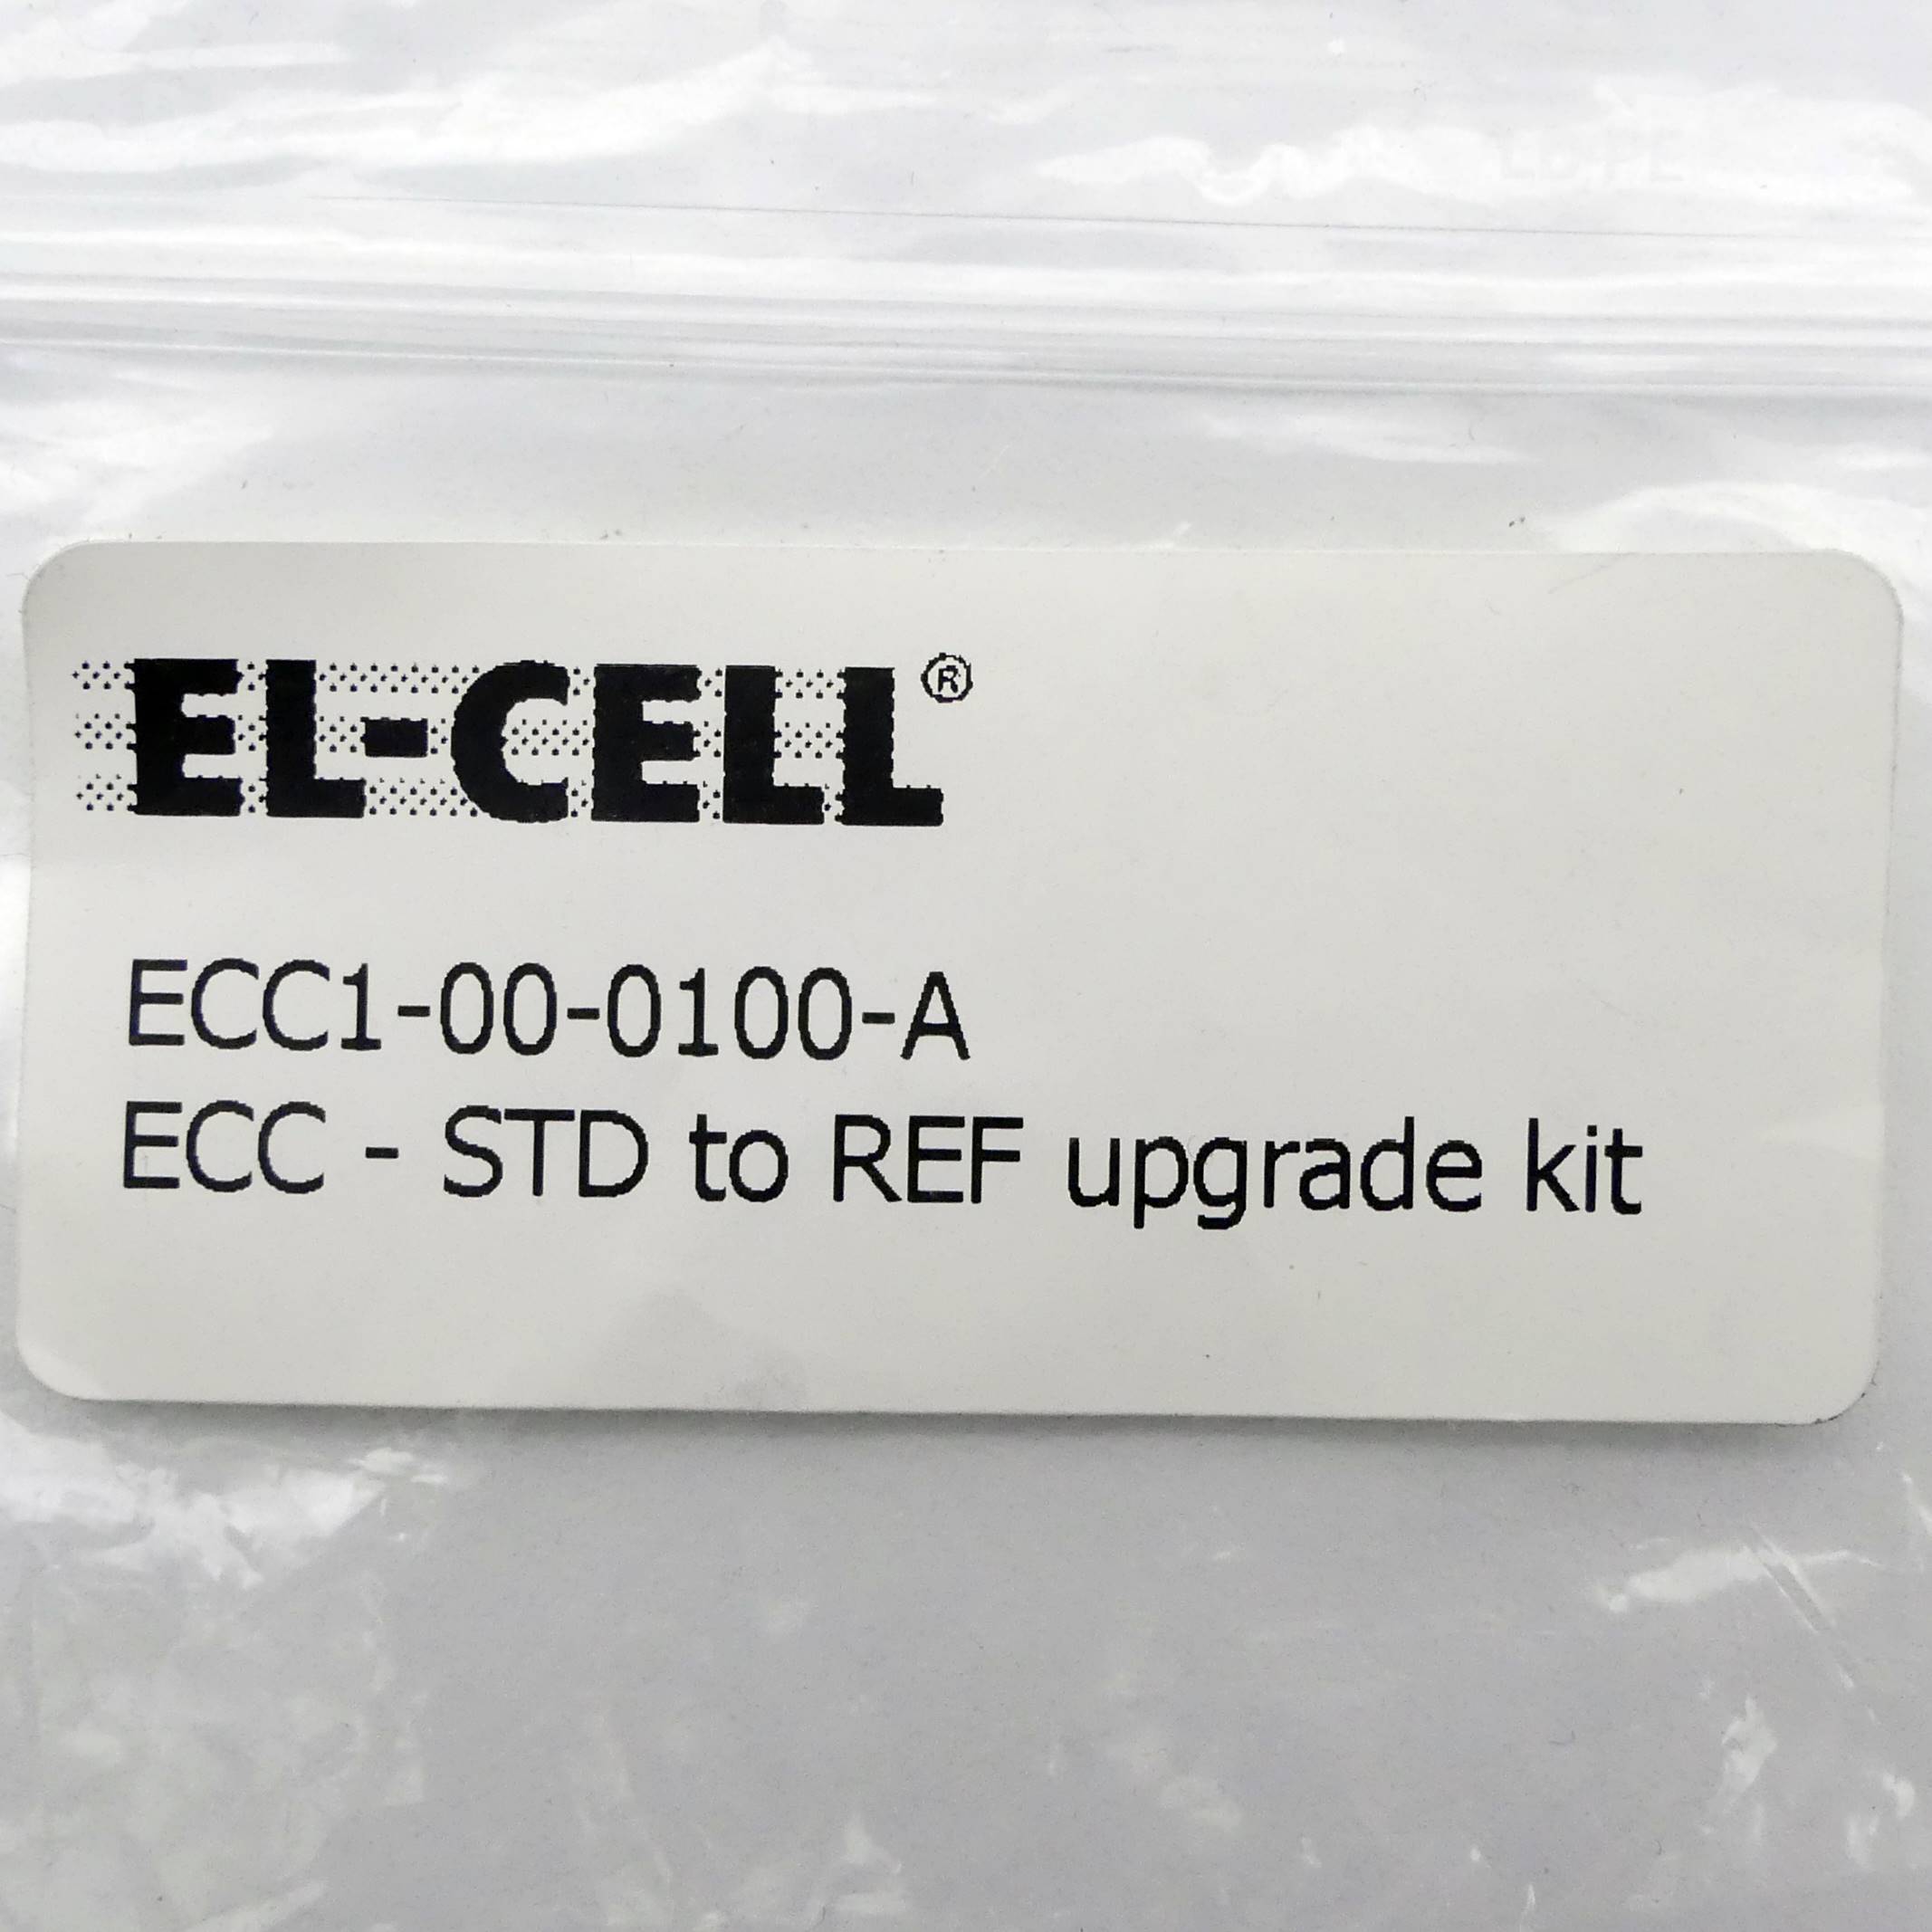 ECC-STD to REF upgrade kit 